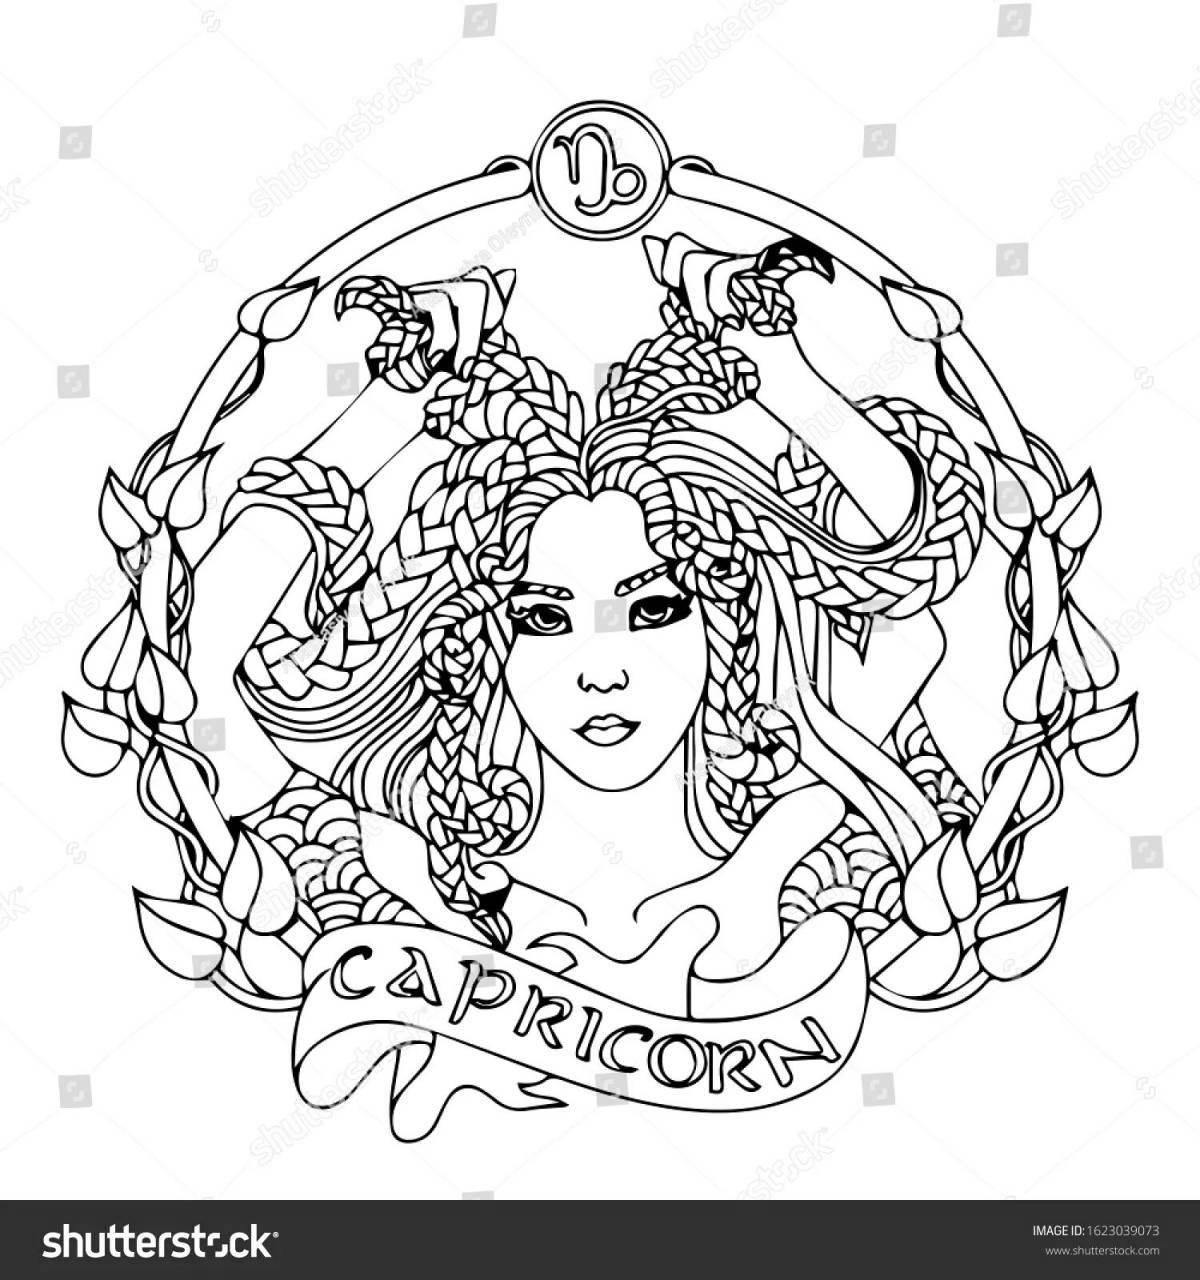 Exuberant zodiac sign Capricorn coloring page